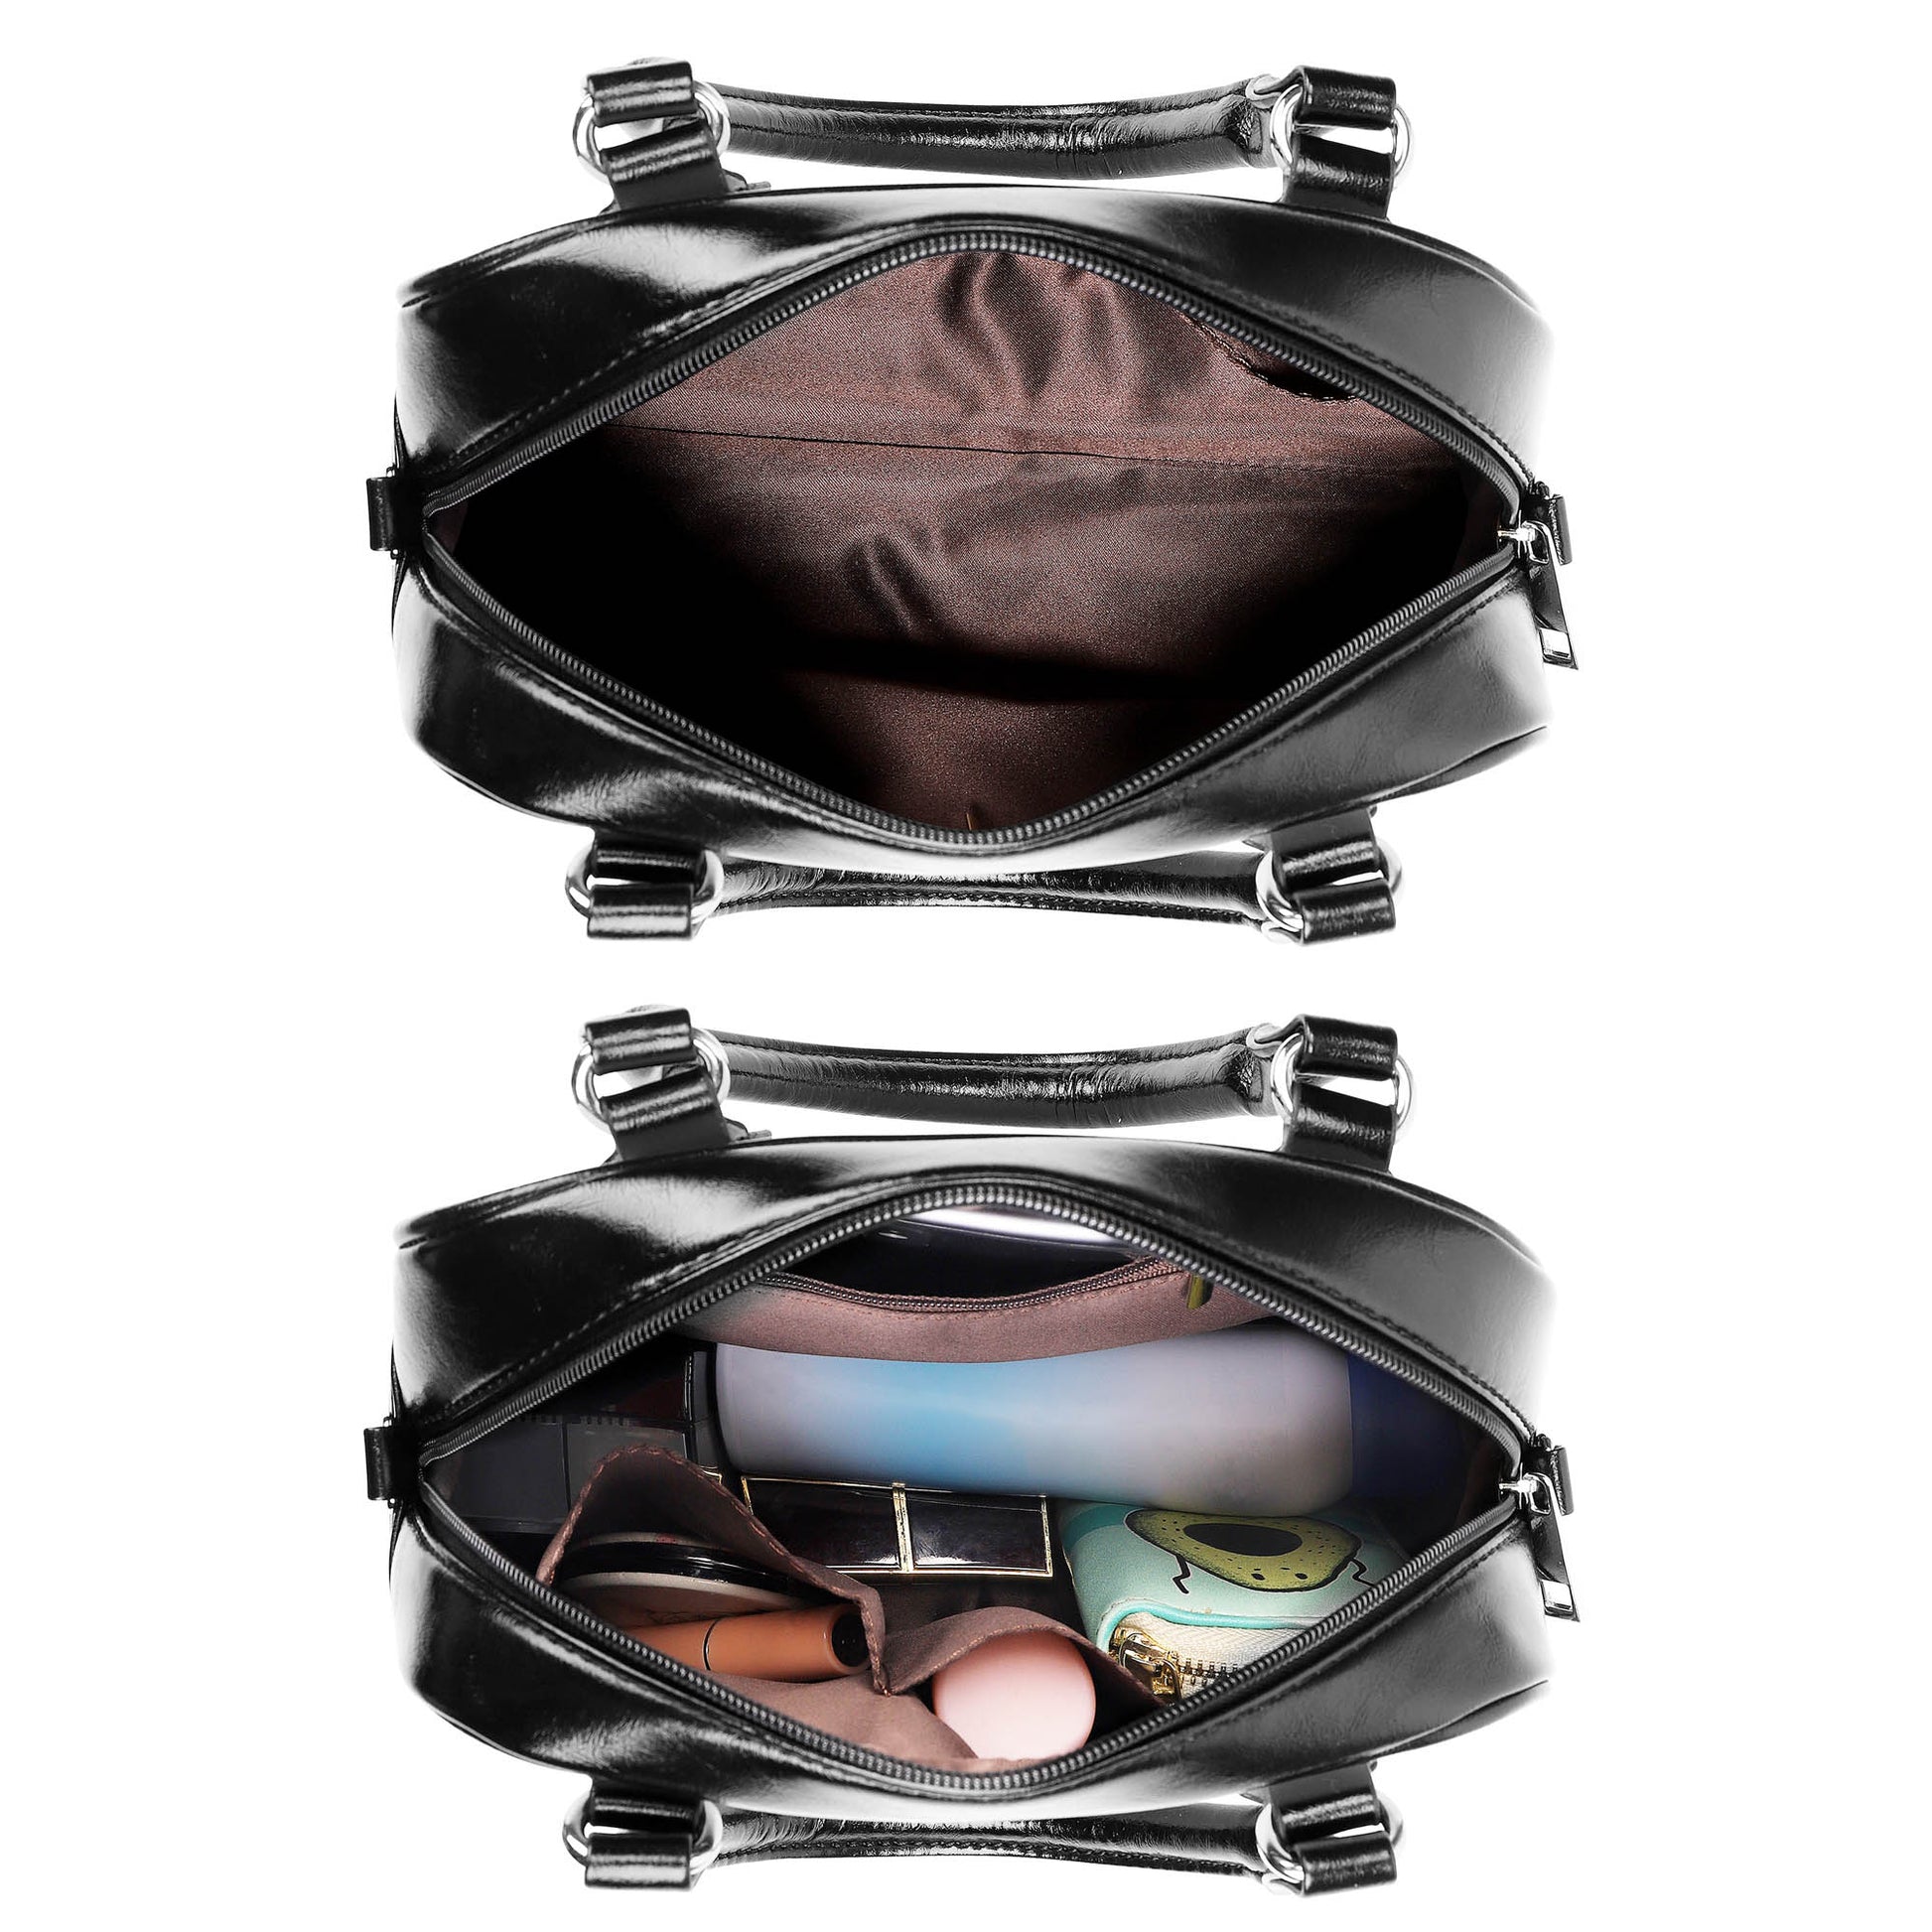 Dunbar Tartan Shoulder Handbags with Family Crest - Tartanvibesclothing